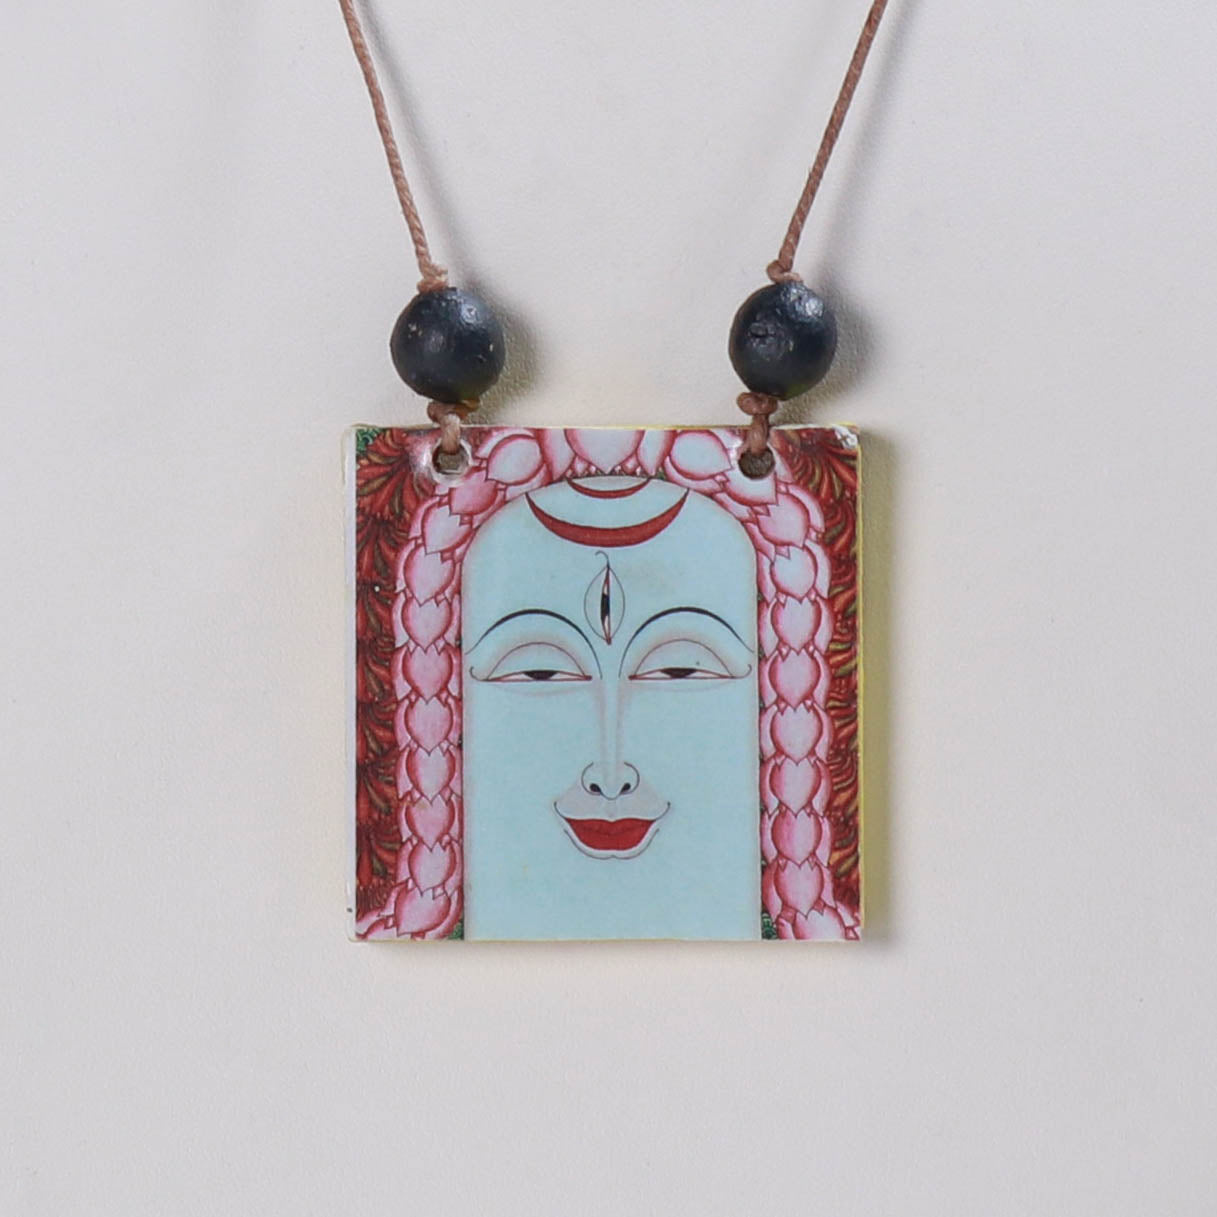 kerala mural wooden necklace